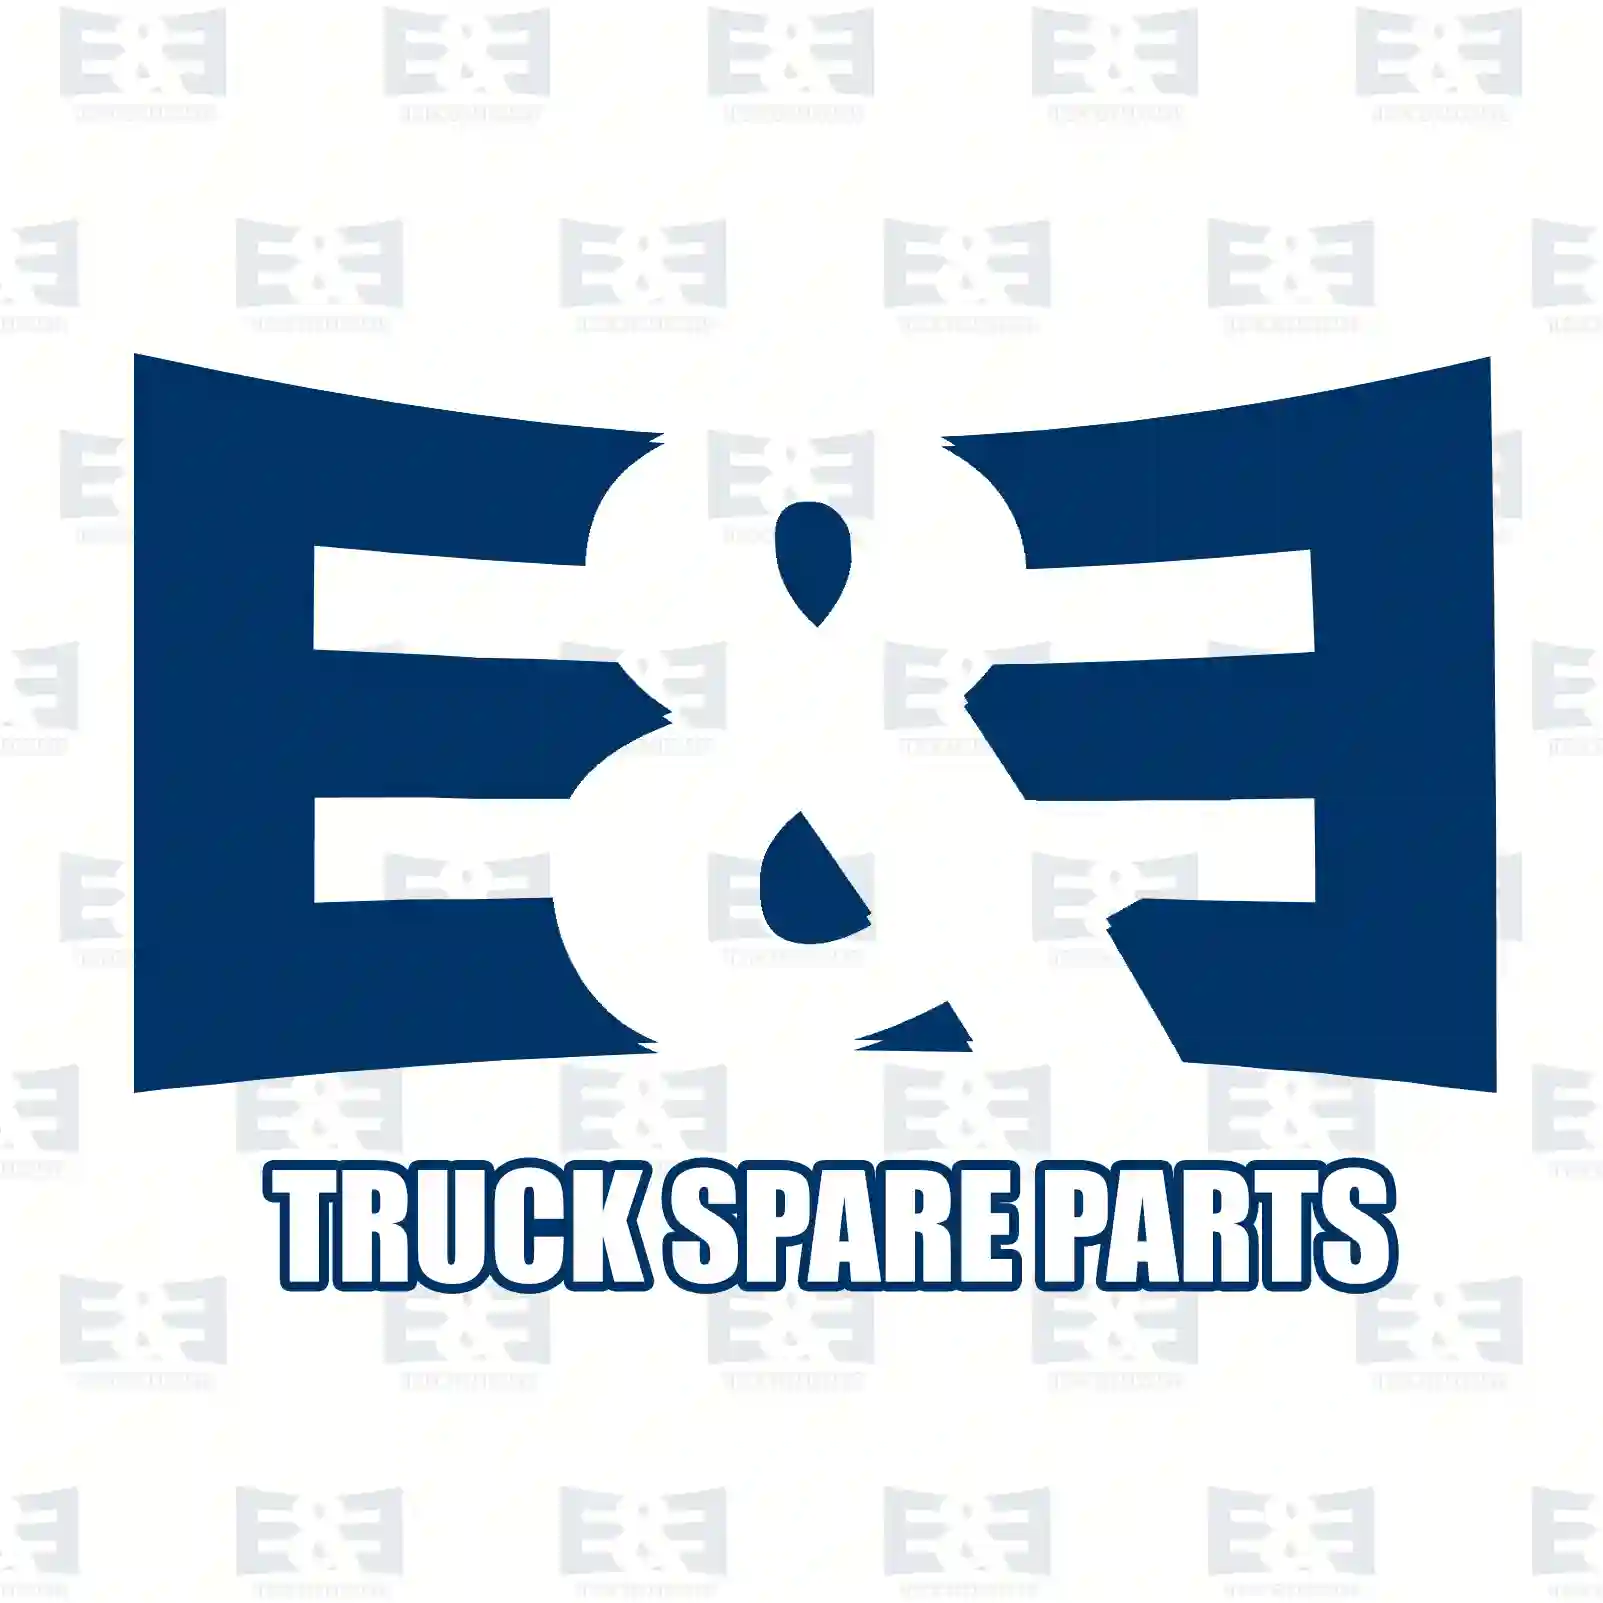 V-belt kit, 2E2286368, 500344477, 98429205, 06580472235, 06580490028, 06580722352, 06580732352, 0059972092, 0099976592, 0109975292 ||  2E2286368 E&E Truck Spare Parts | Truck Spare Parts, Auotomotive Spare Parts V-belt kit, 2E2286368, 500344477, 98429205, 06580472235, 06580490028, 06580722352, 06580732352, 0059972092, 0099976592, 0109975292 ||  2E2286368 E&E Truck Spare Parts | Truck Spare Parts, Auotomotive Spare Parts